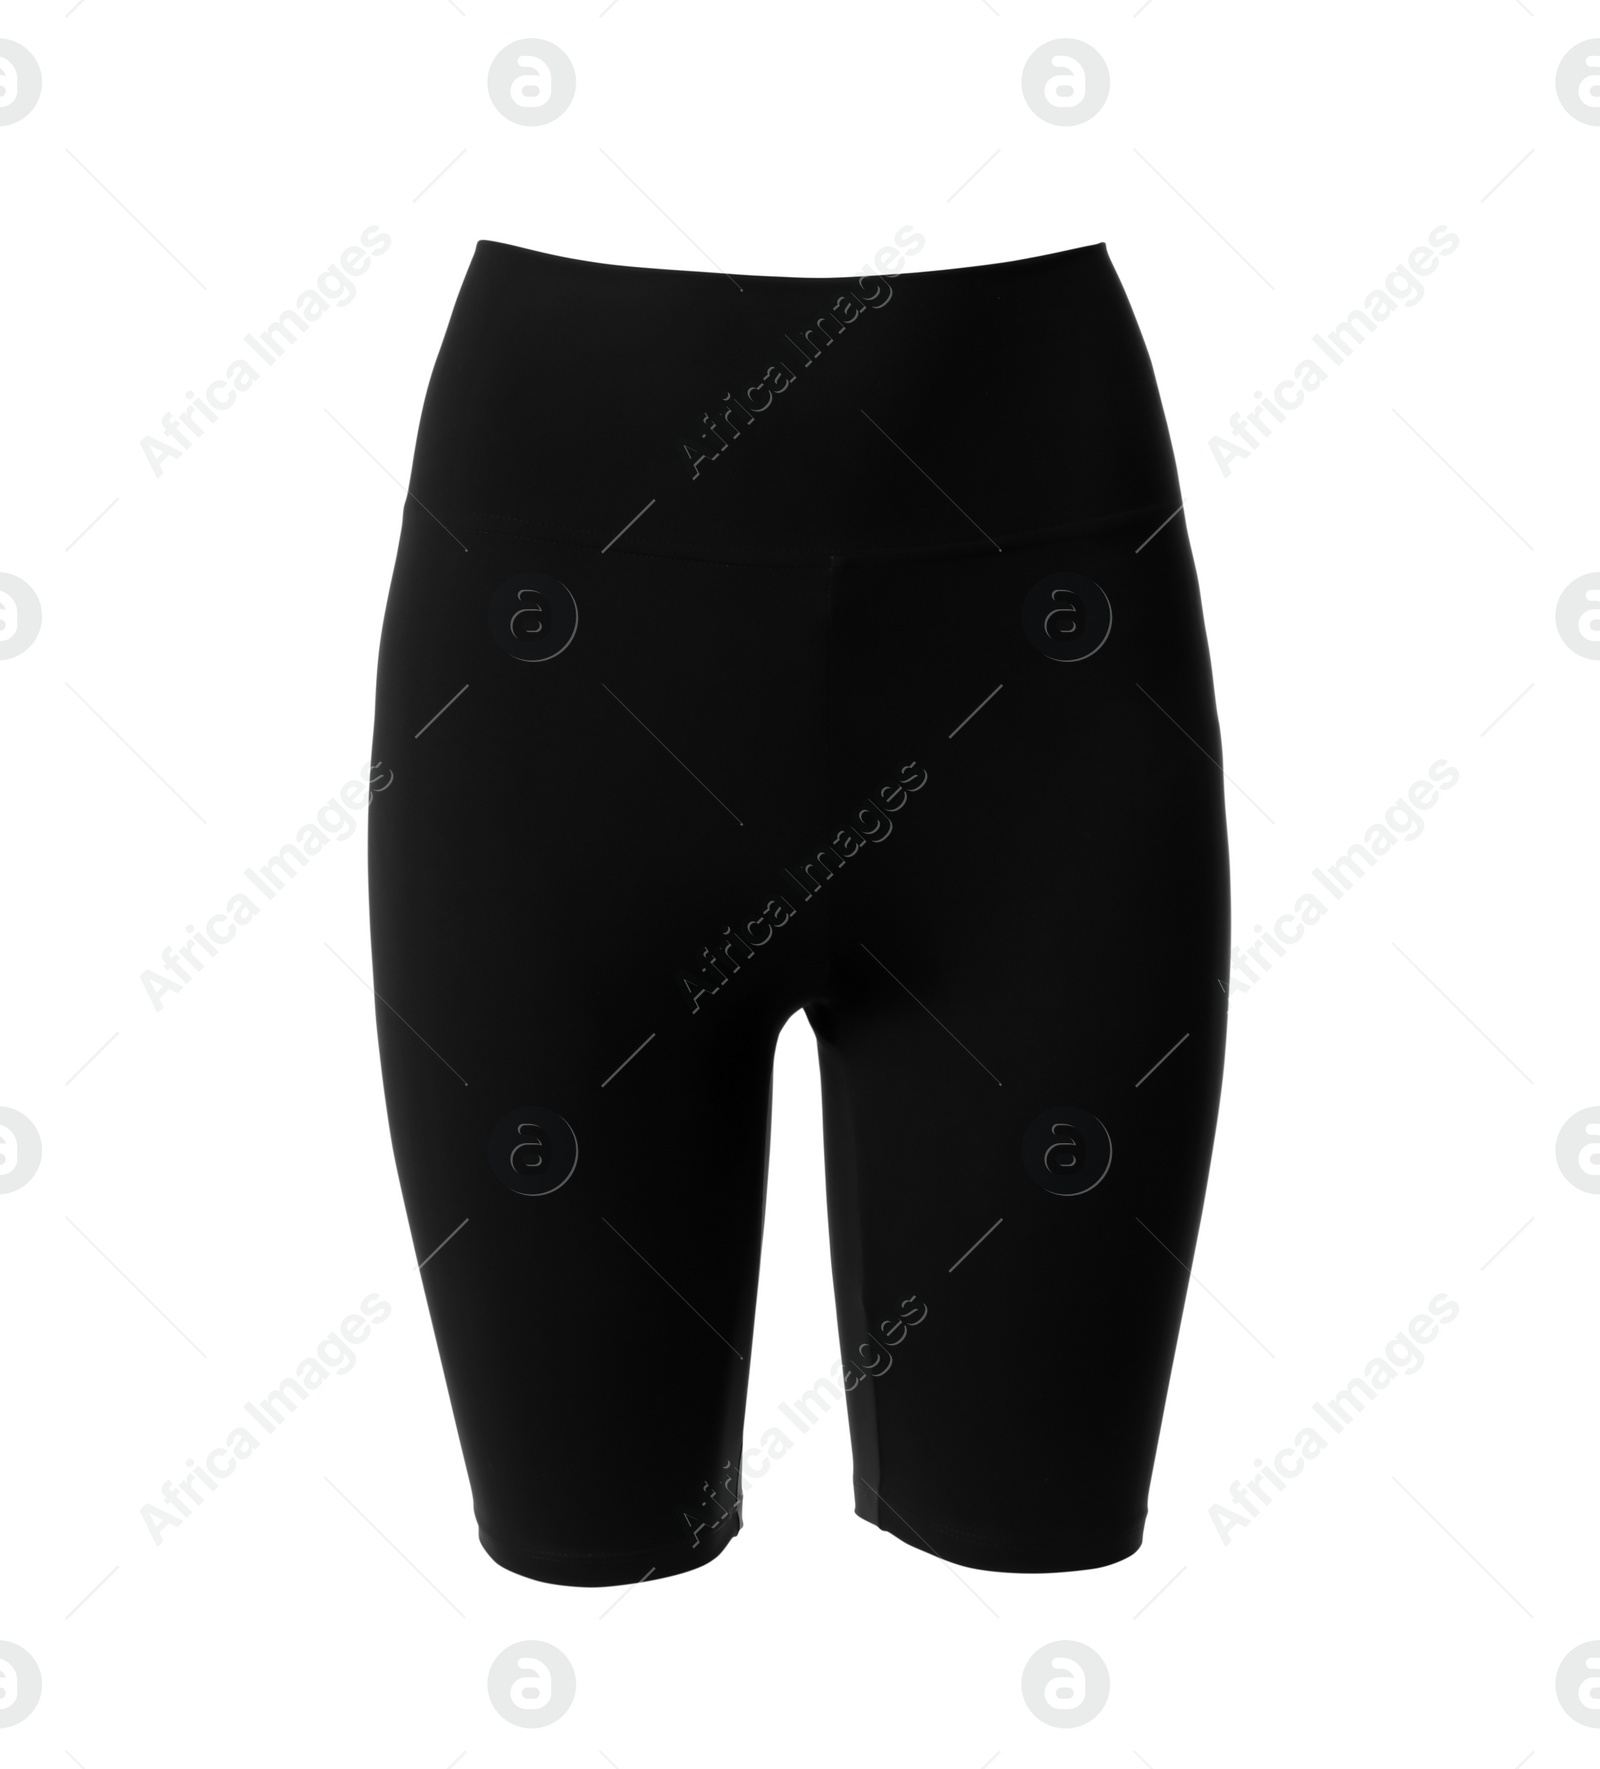 Photo of Black women's cycling shorts isolated on white. Sports clothing